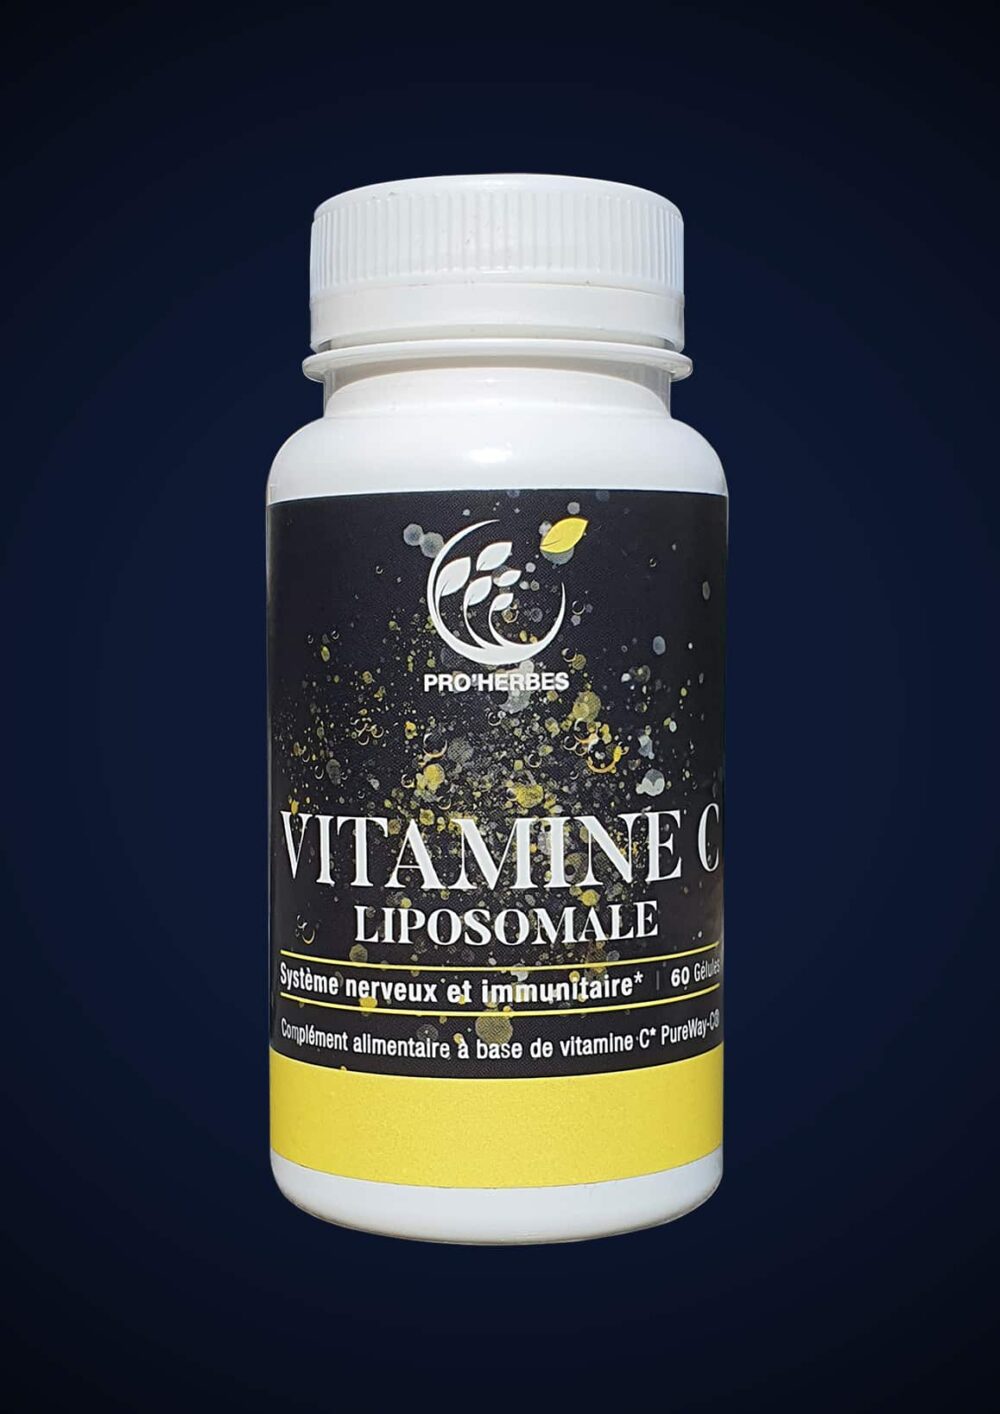 Vitamine C liposomale - 60 gélules - Pro'herbes